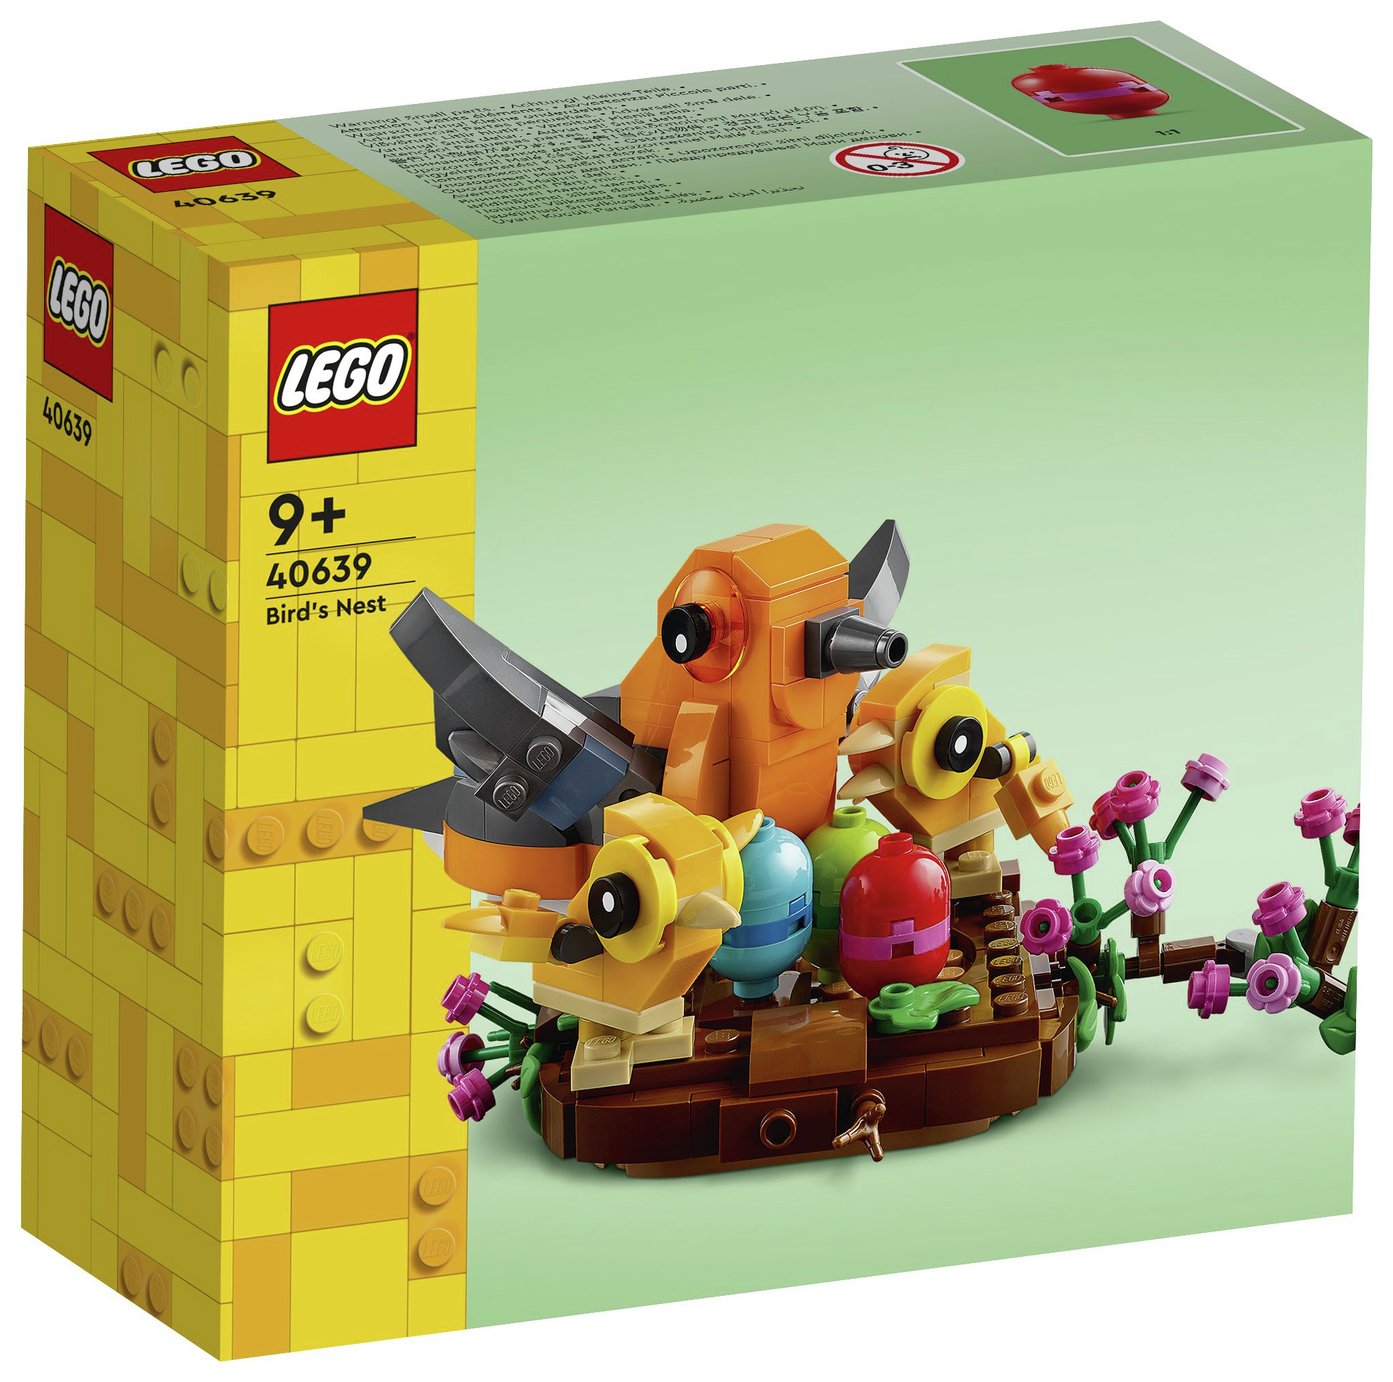 LEGO Bird's Nest building kit 40639